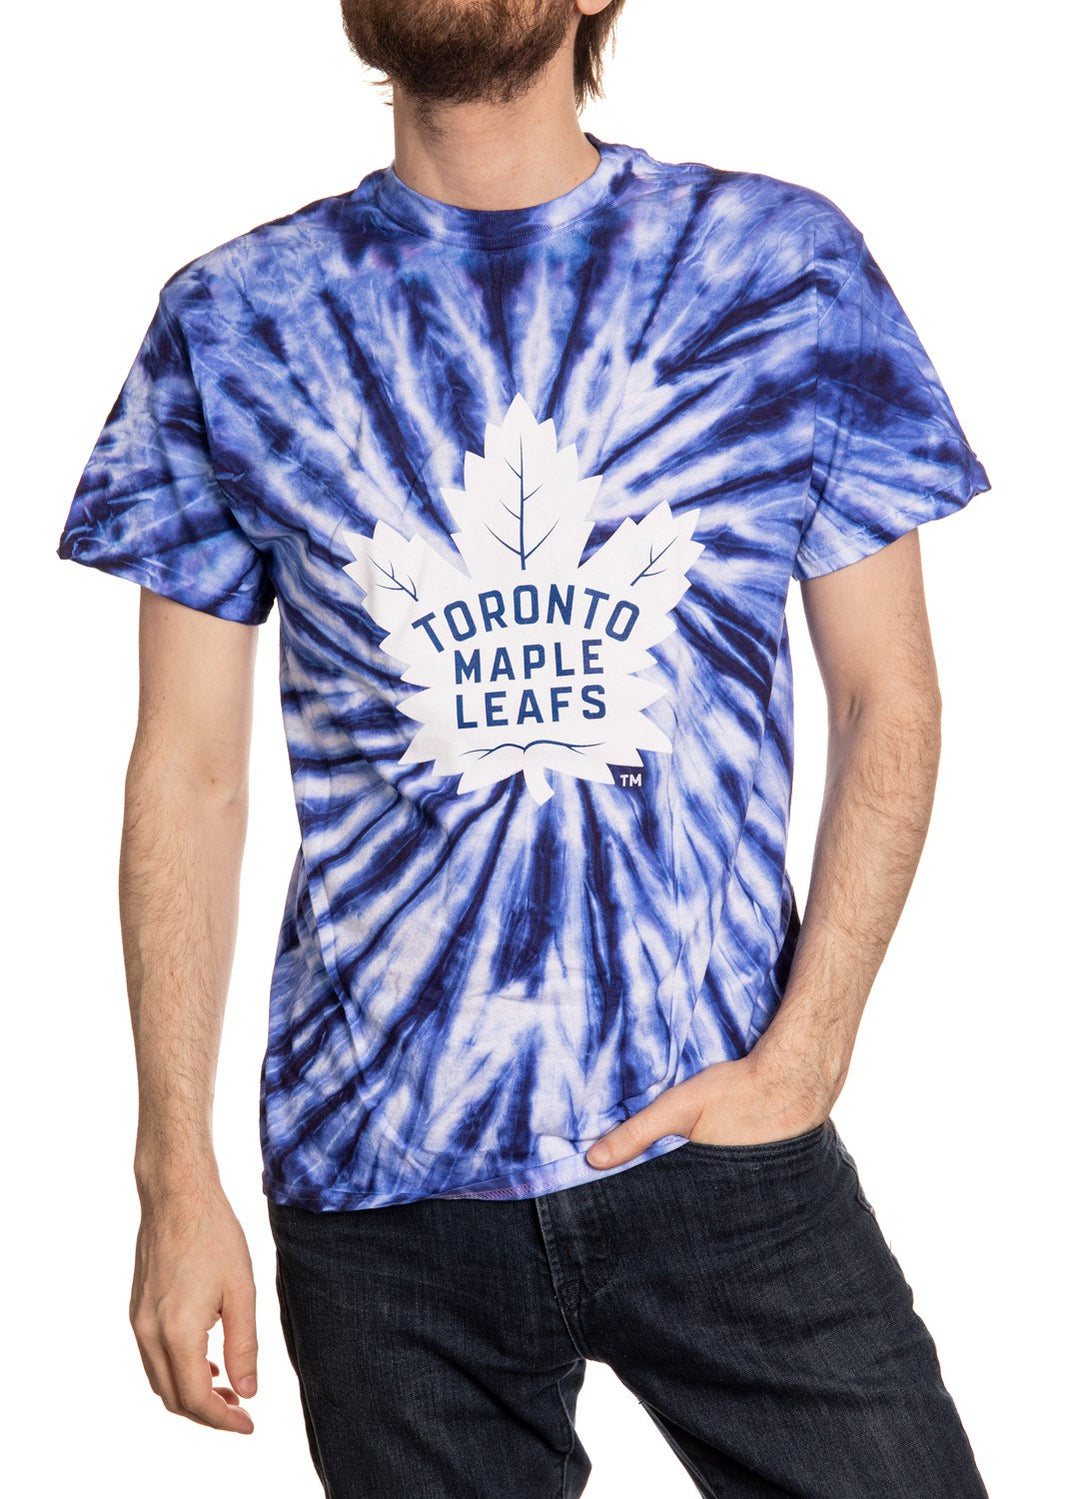 Toronto Maple Leafs Blue Tie Dye T-Shirt Front View